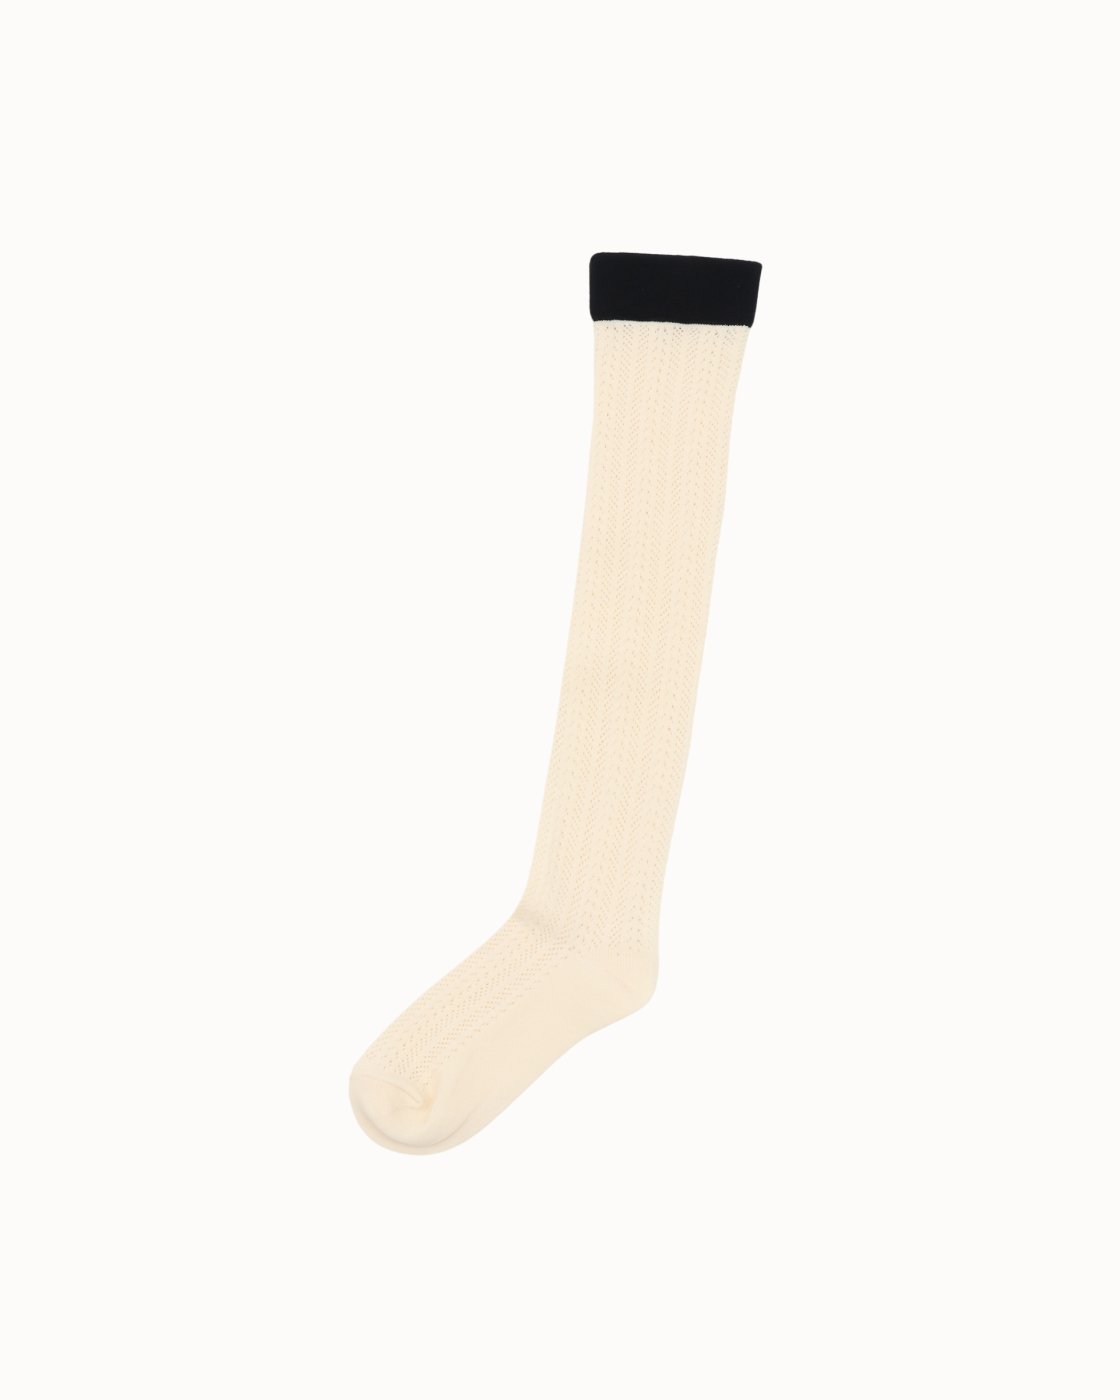 leur logette - Stripe Mesh Socks - Off White